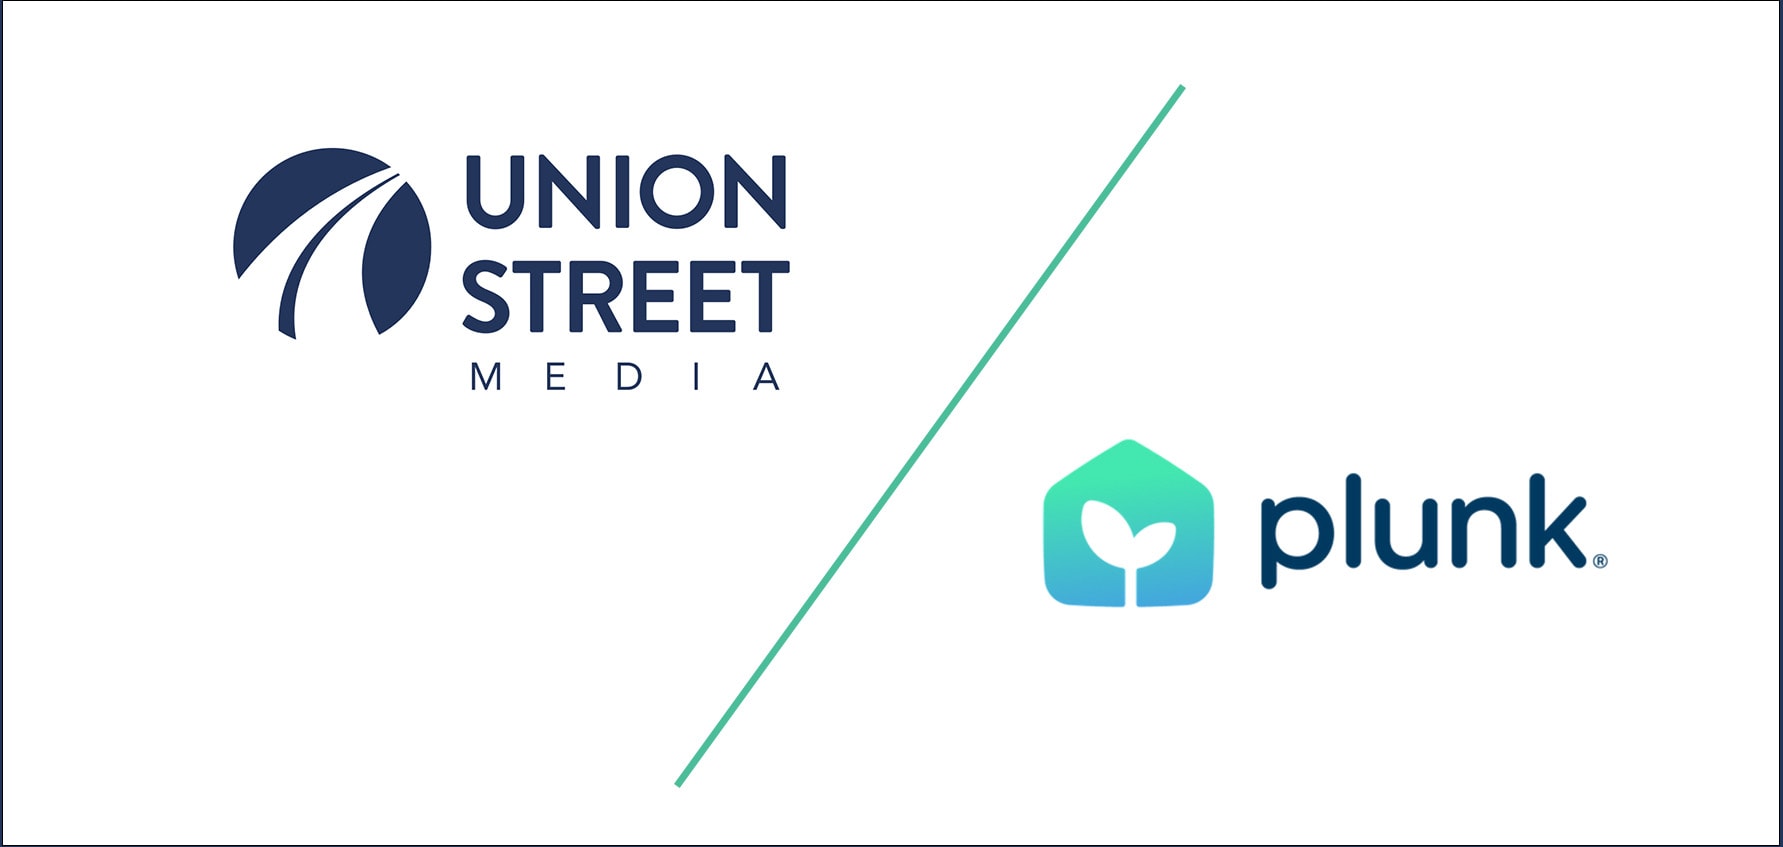 union street media and plunk partnership